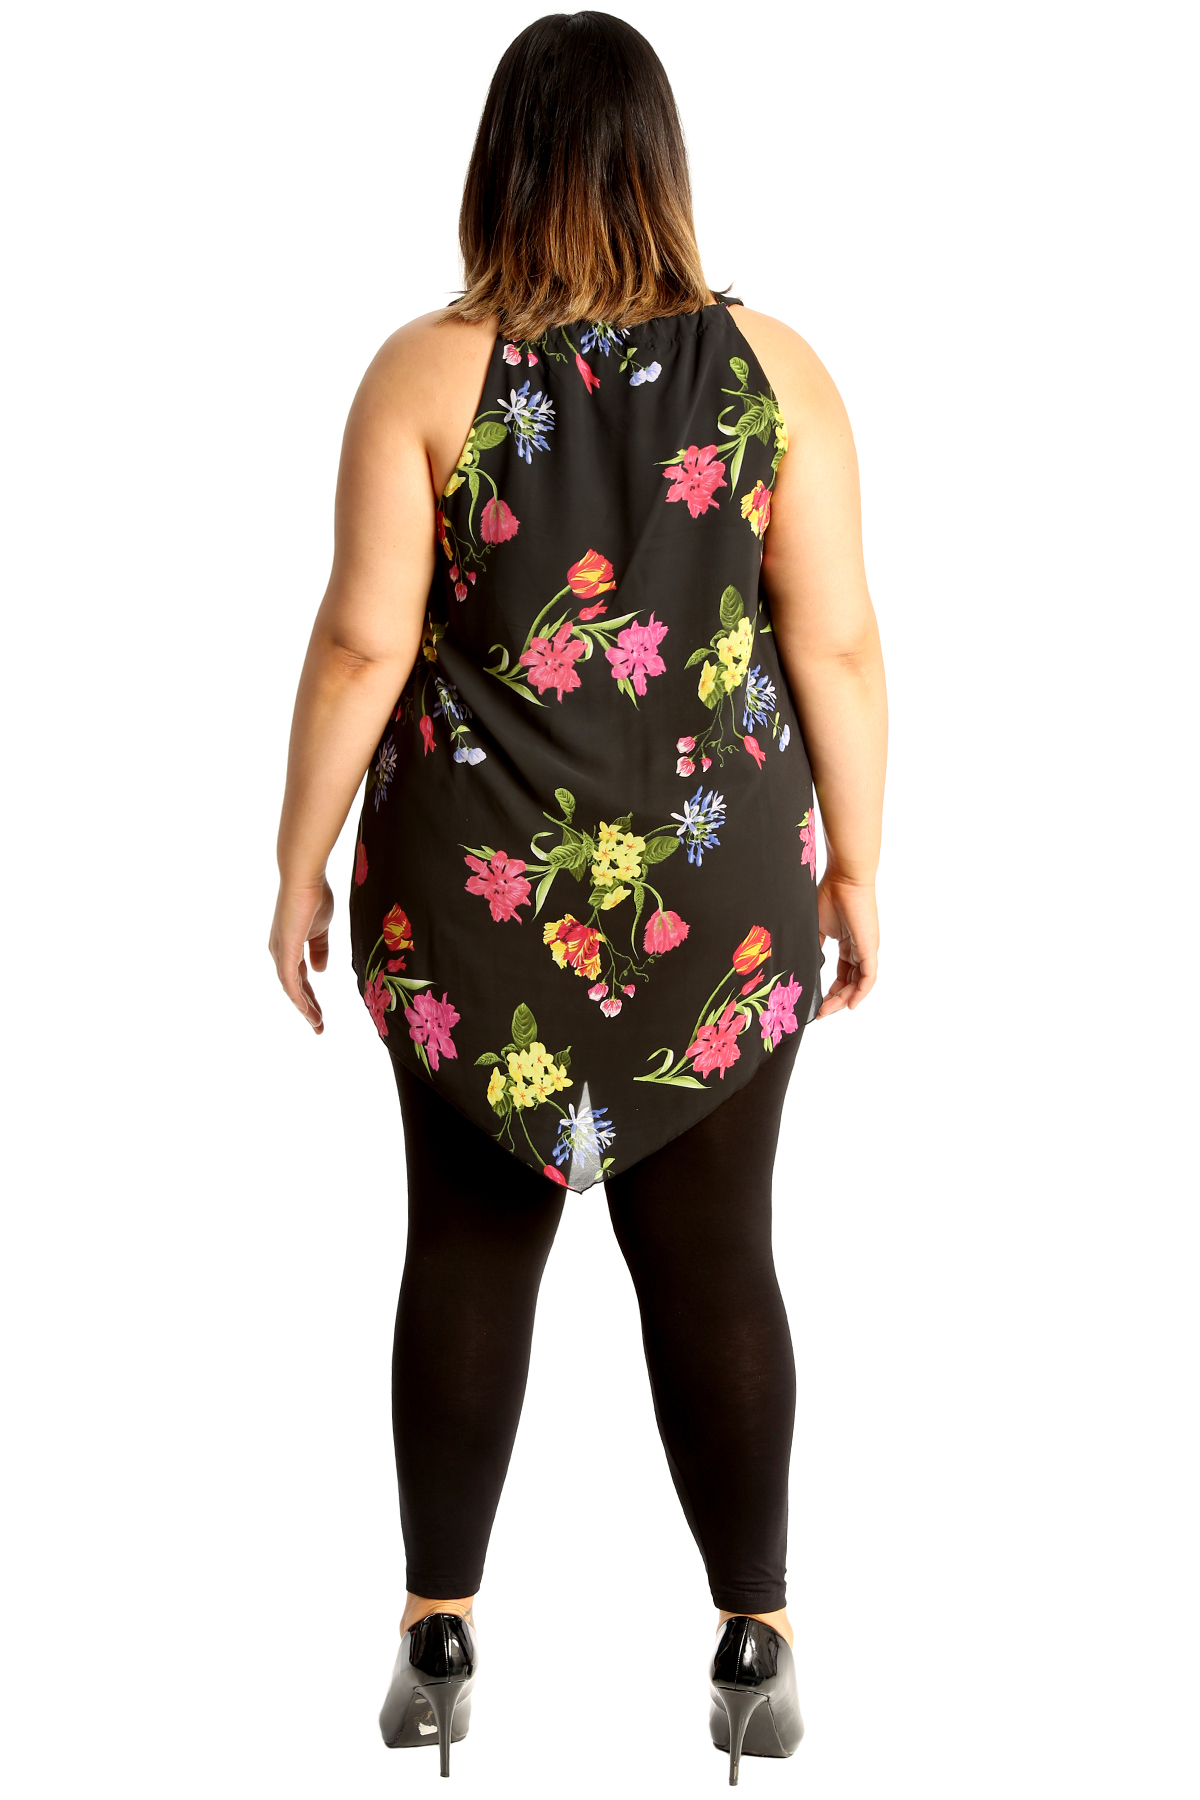 New Womens Plus Size Top Ladies Chiffon Floral Print Sleeveless Tunic Hanky Hem